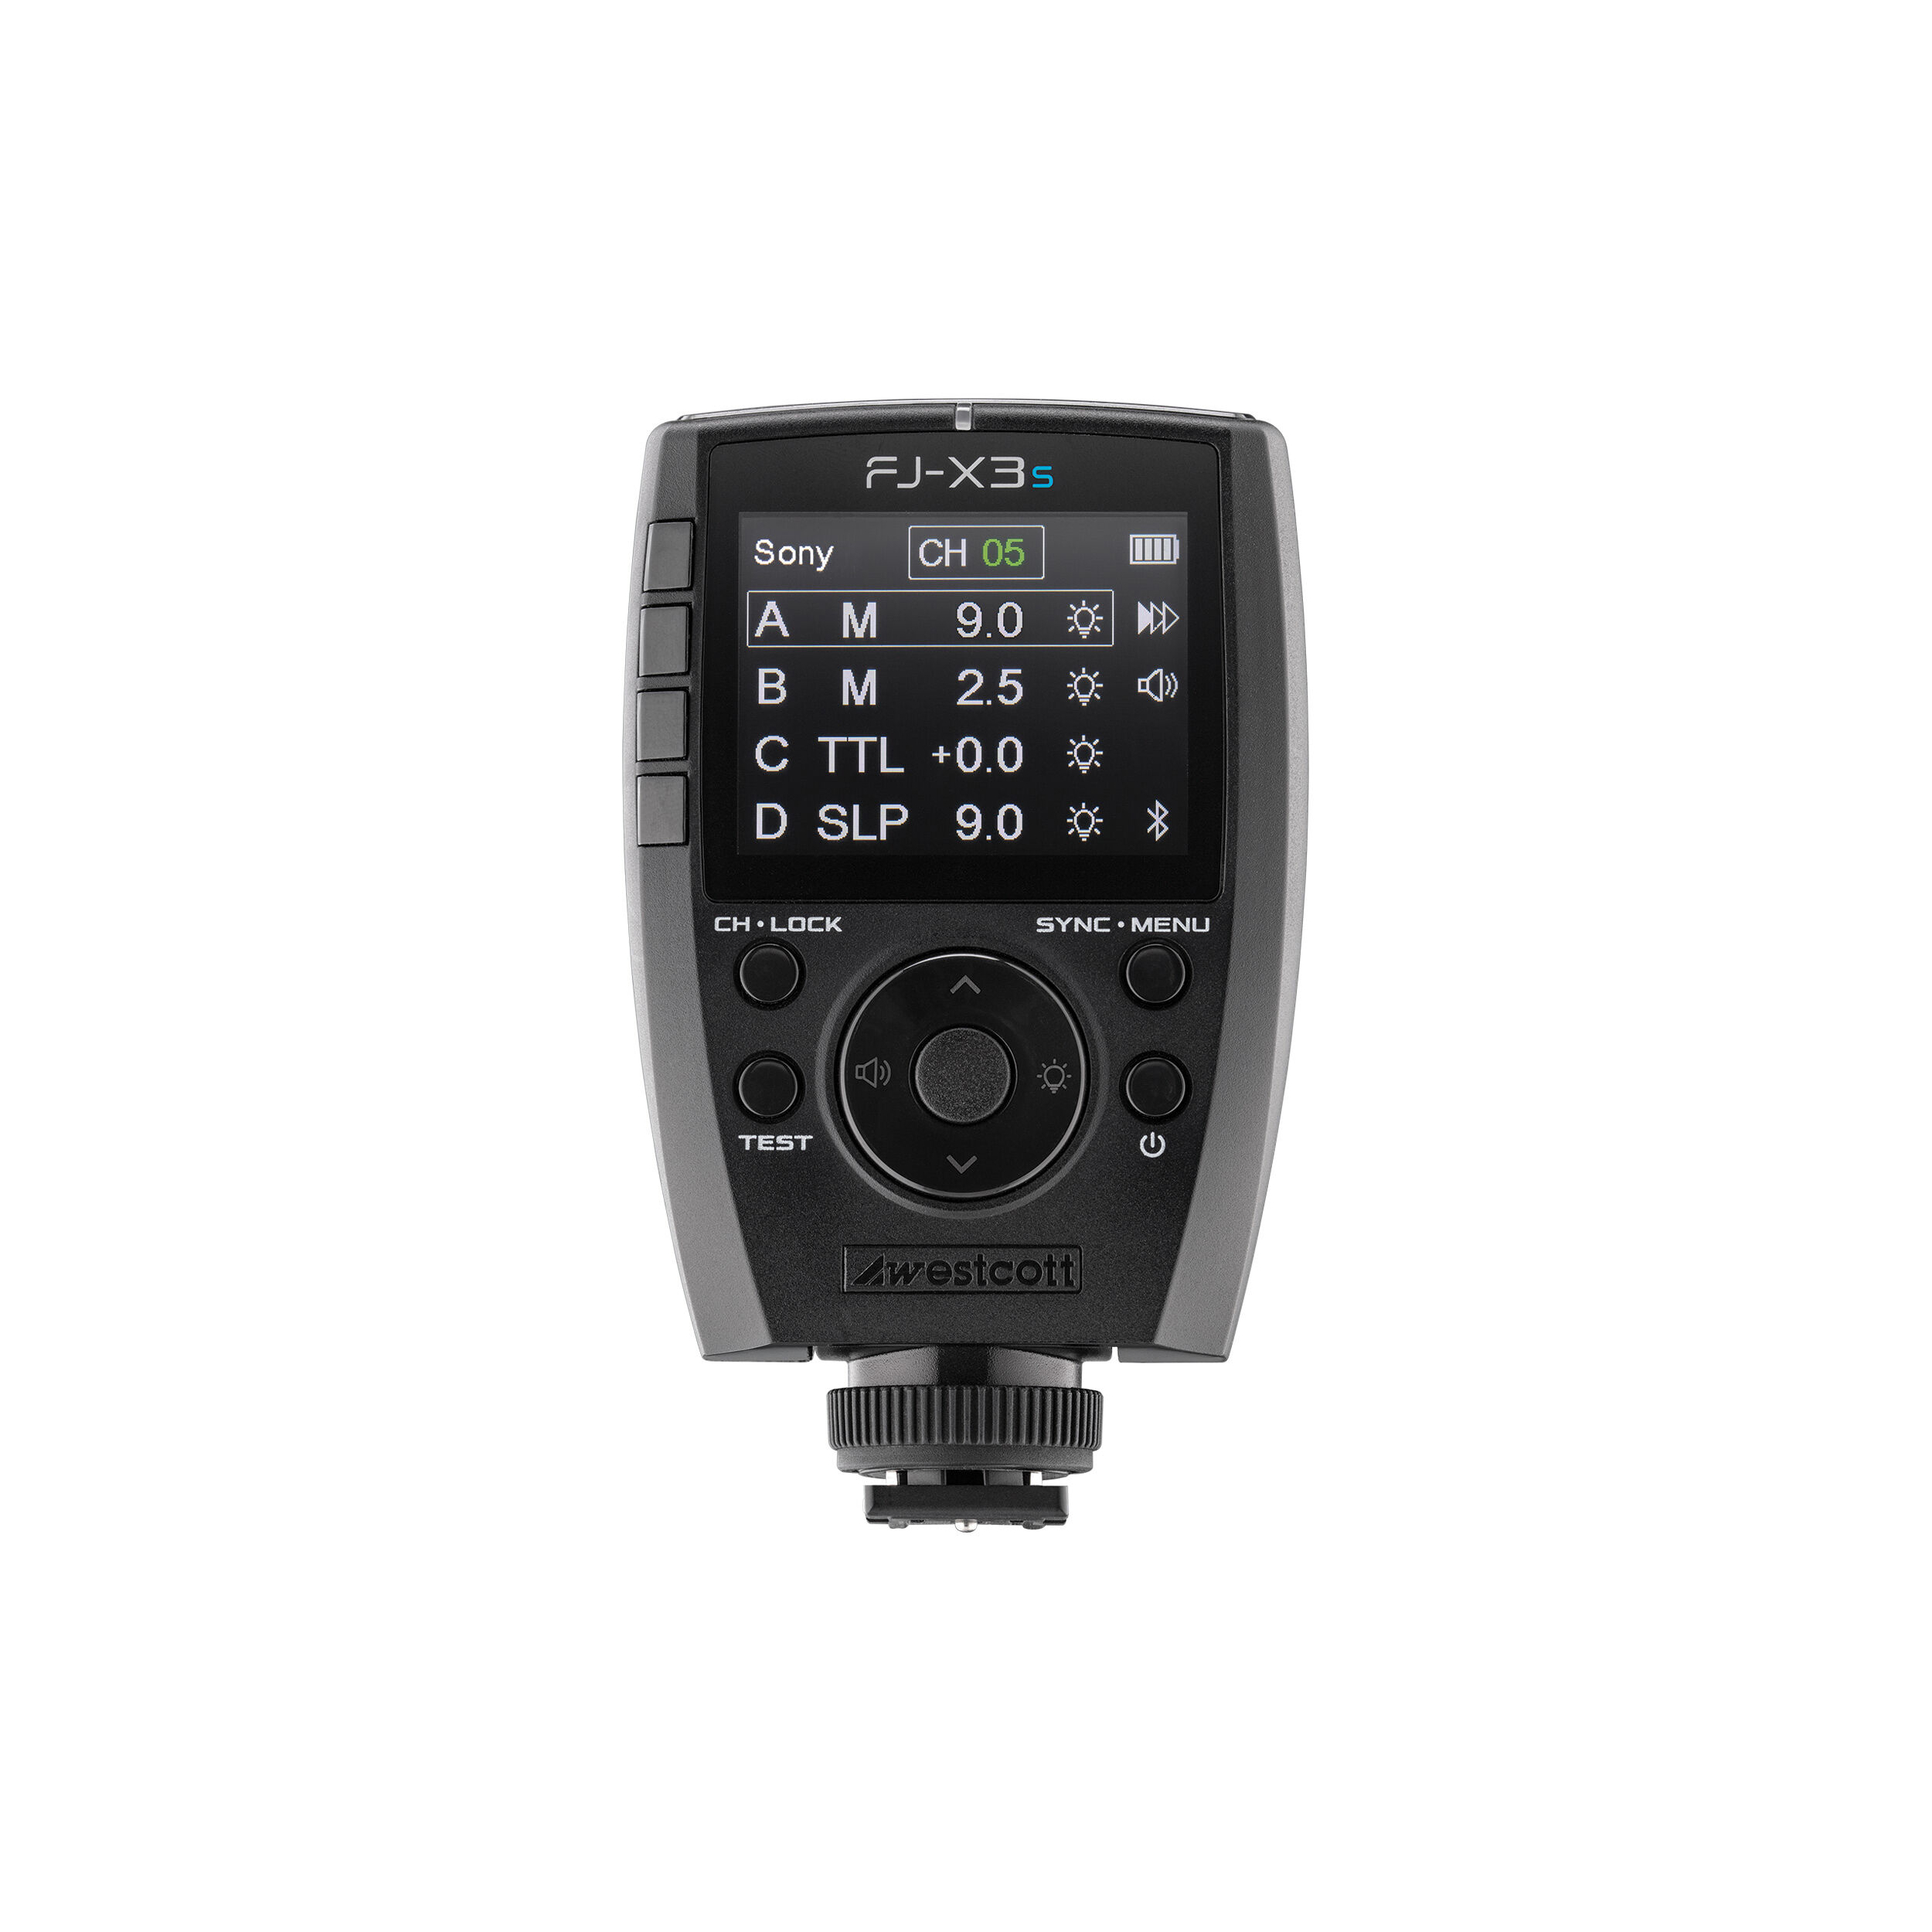 Westcott FJ-X3 S Wireless Flash Trigger for Sony Cameras - Open Box